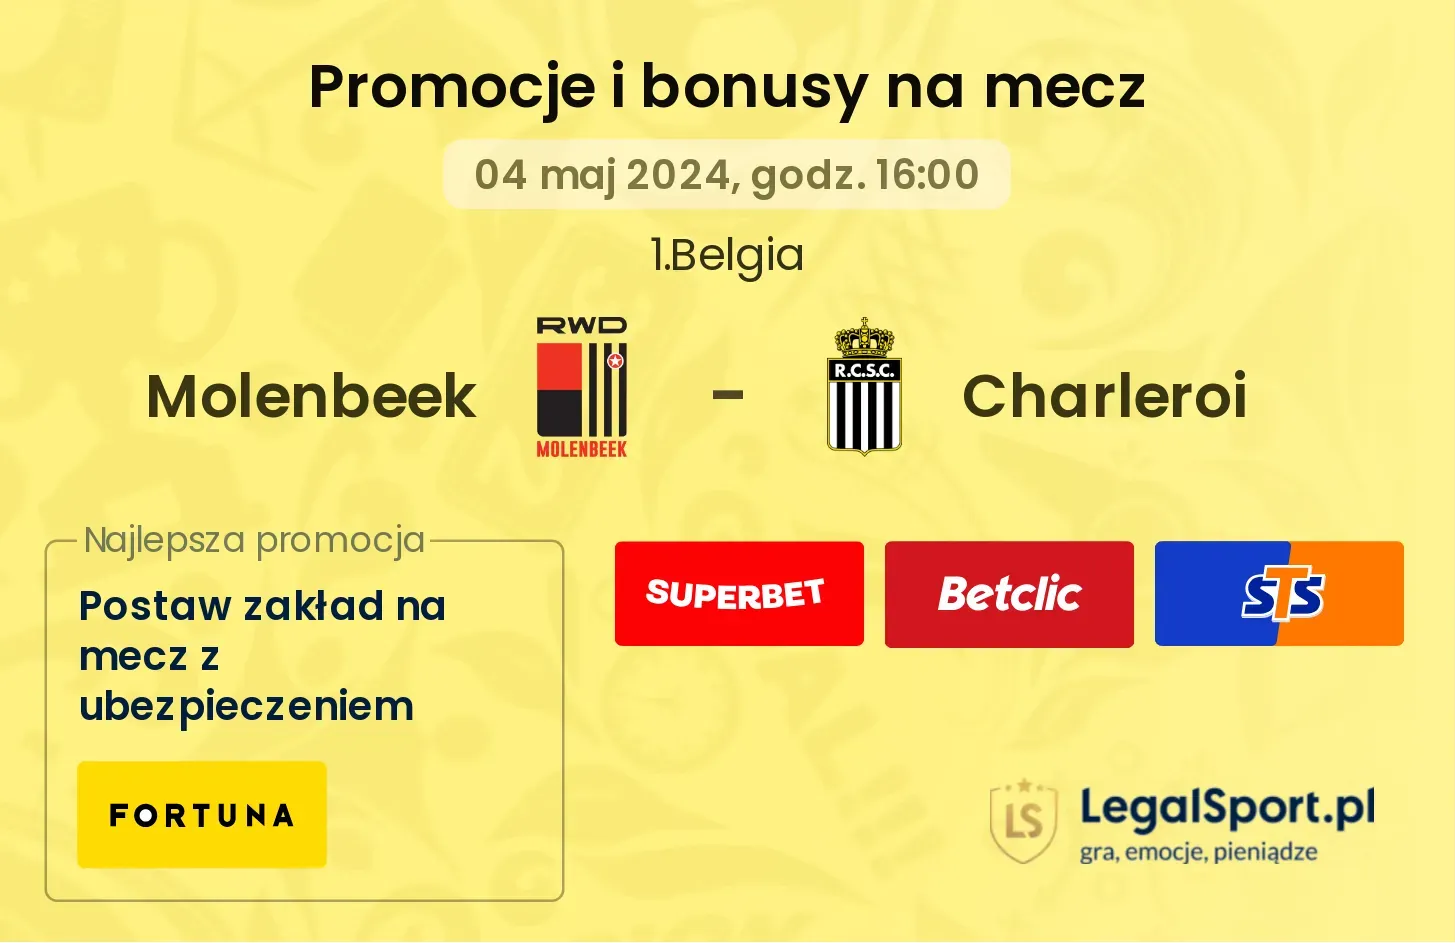 Molenbeek - Charleroi promocje bonusy na mecz